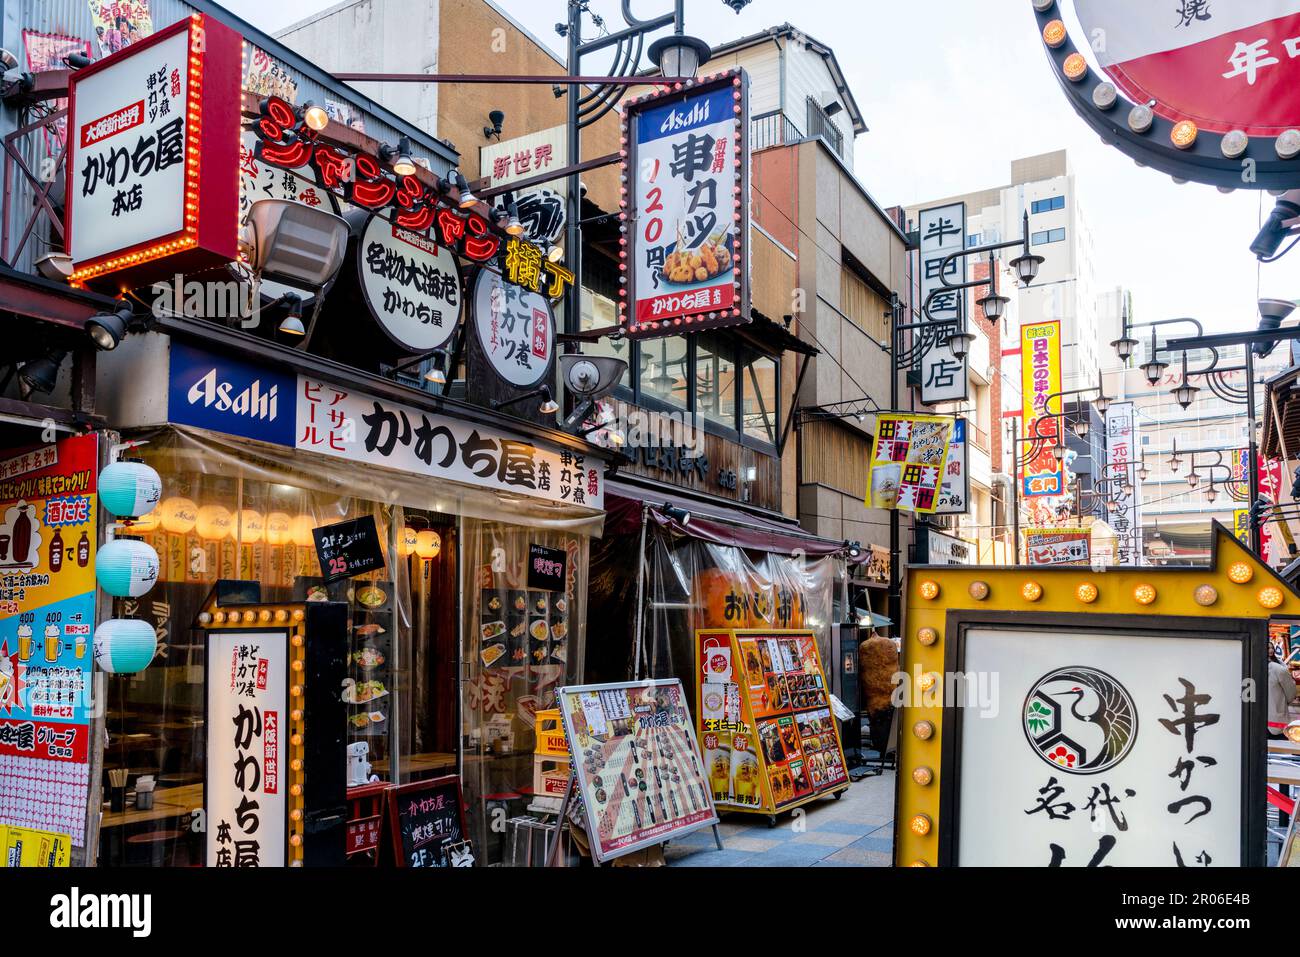 Ristoranti e negozi nel quartiere Shinsekai, Osaka/Giappone Foto Stock